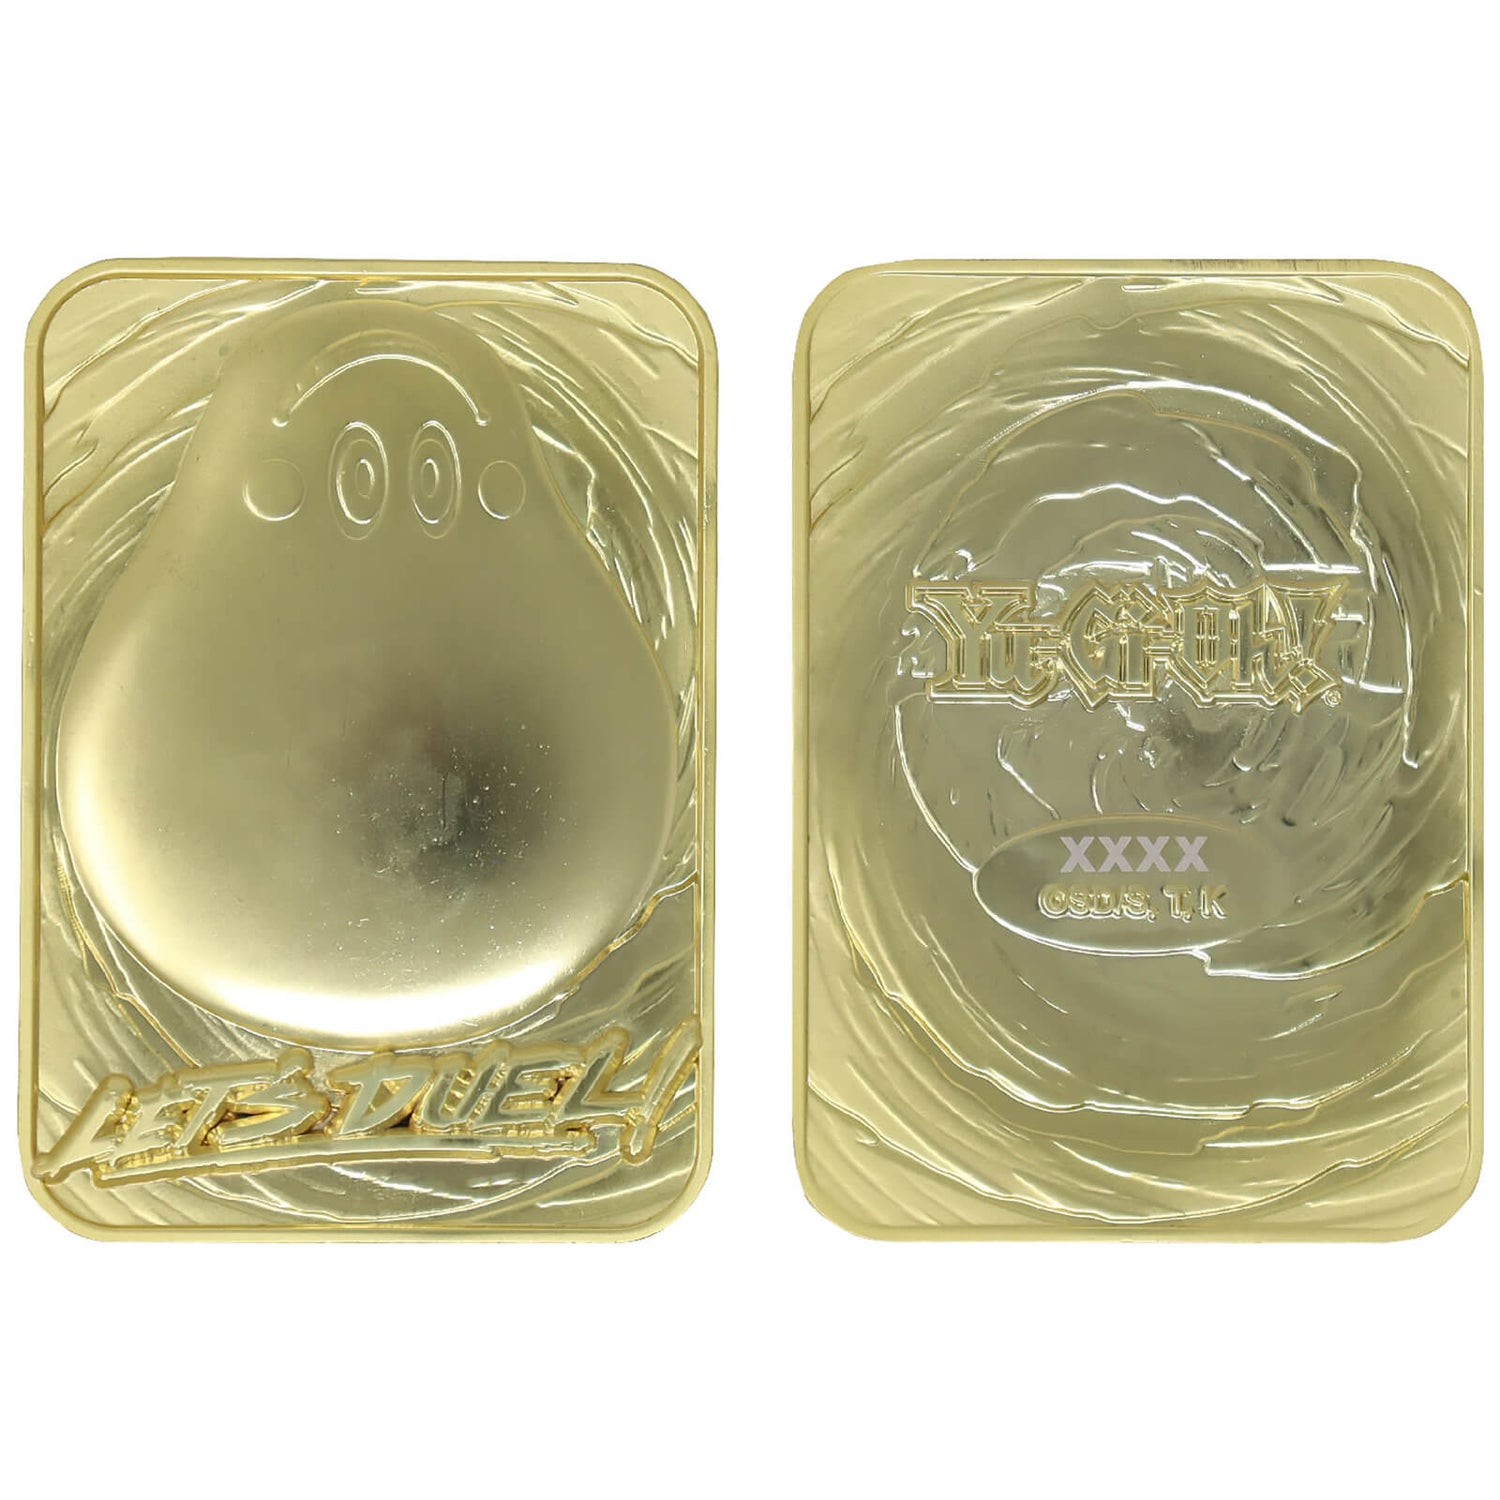 Fanattik: Yu-Gi-Oh! Limited Edition 24K Gold Plated Collectible - Marshmallon